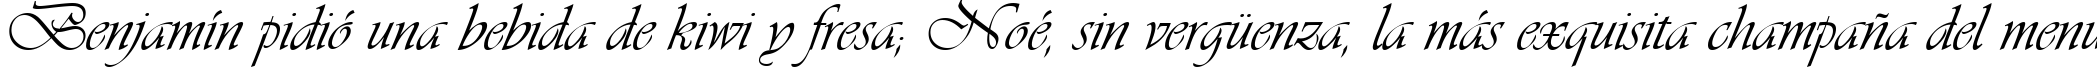 Пример написания шрифтом Vianta текста на испанском